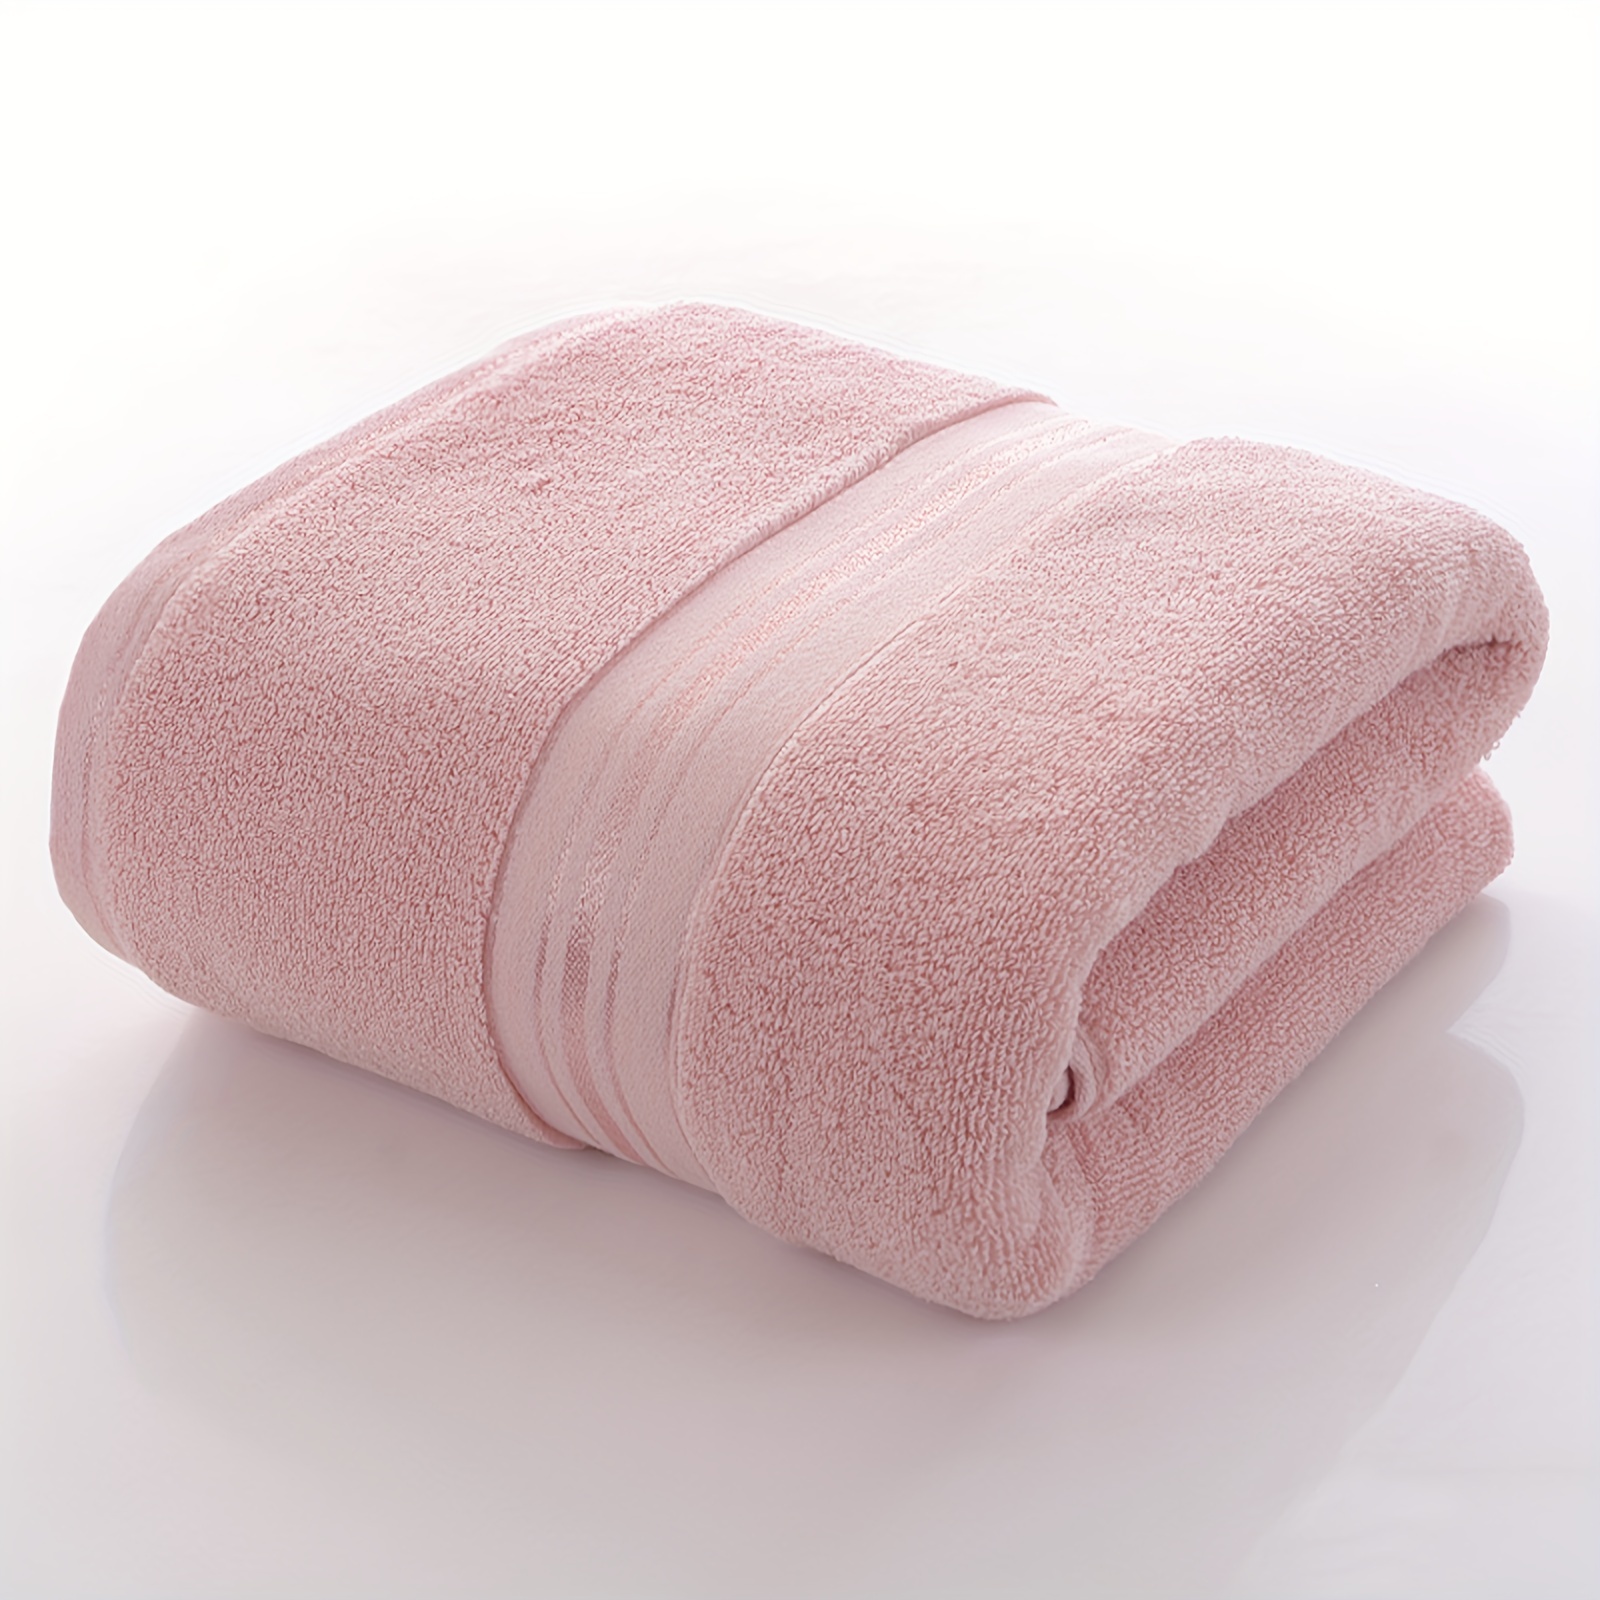 Super-Plush Bath Sheets, Luxury Bath Towels